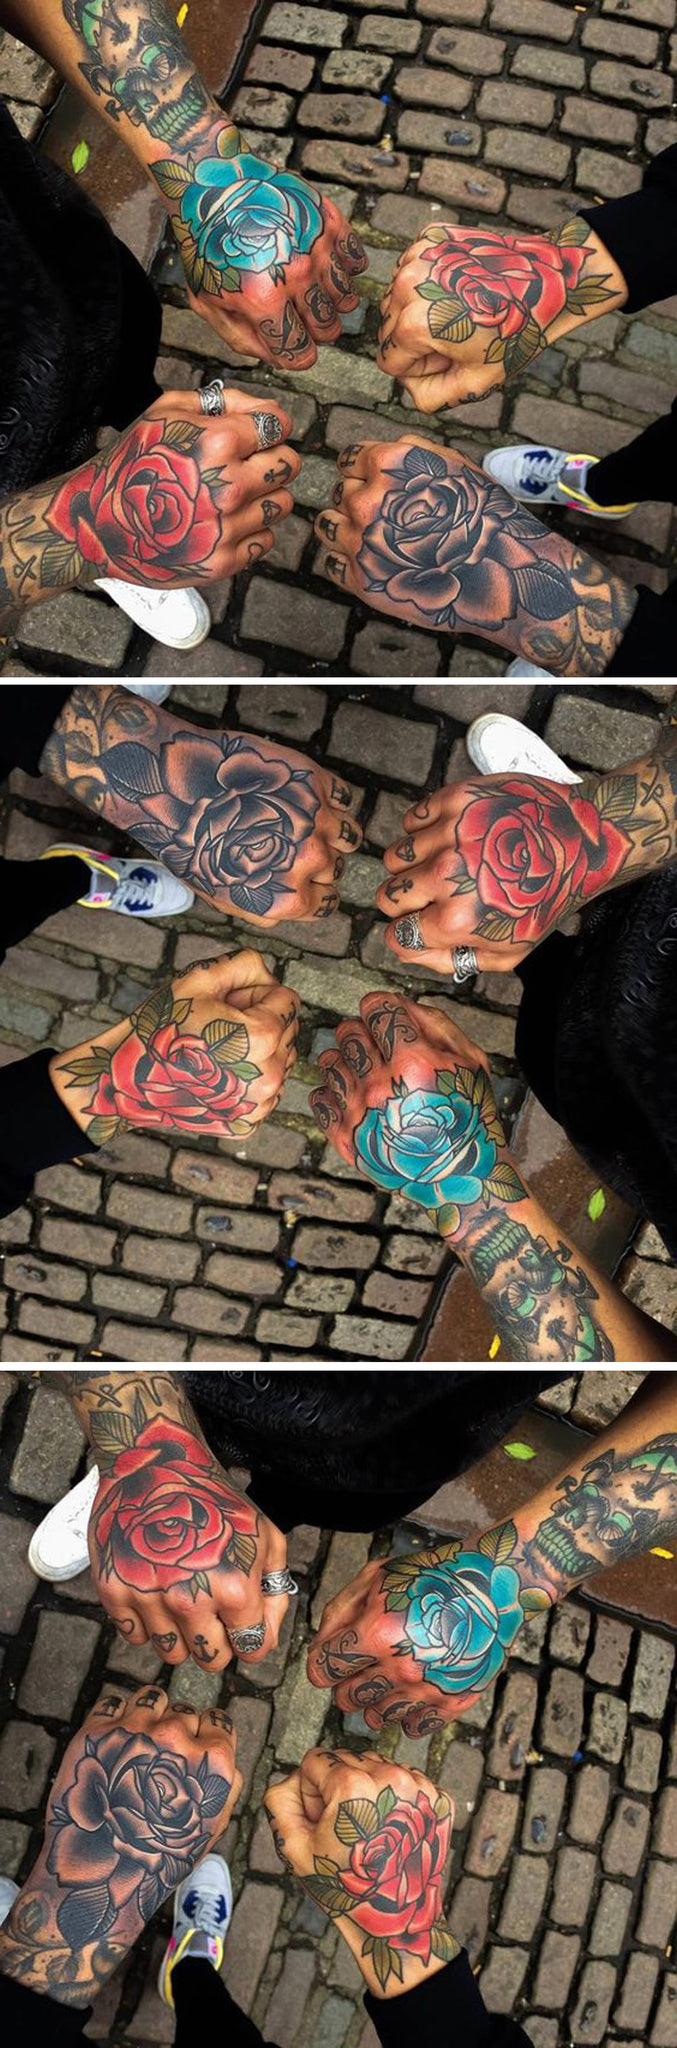 Matching Rose Hand Tattoo Ideas for Bestfriends, Sisters for 4, Friends - Floral Flower Watercolor Wrist Tatouage - Ideas Del Tatuaje - www.MyBodiArt.com